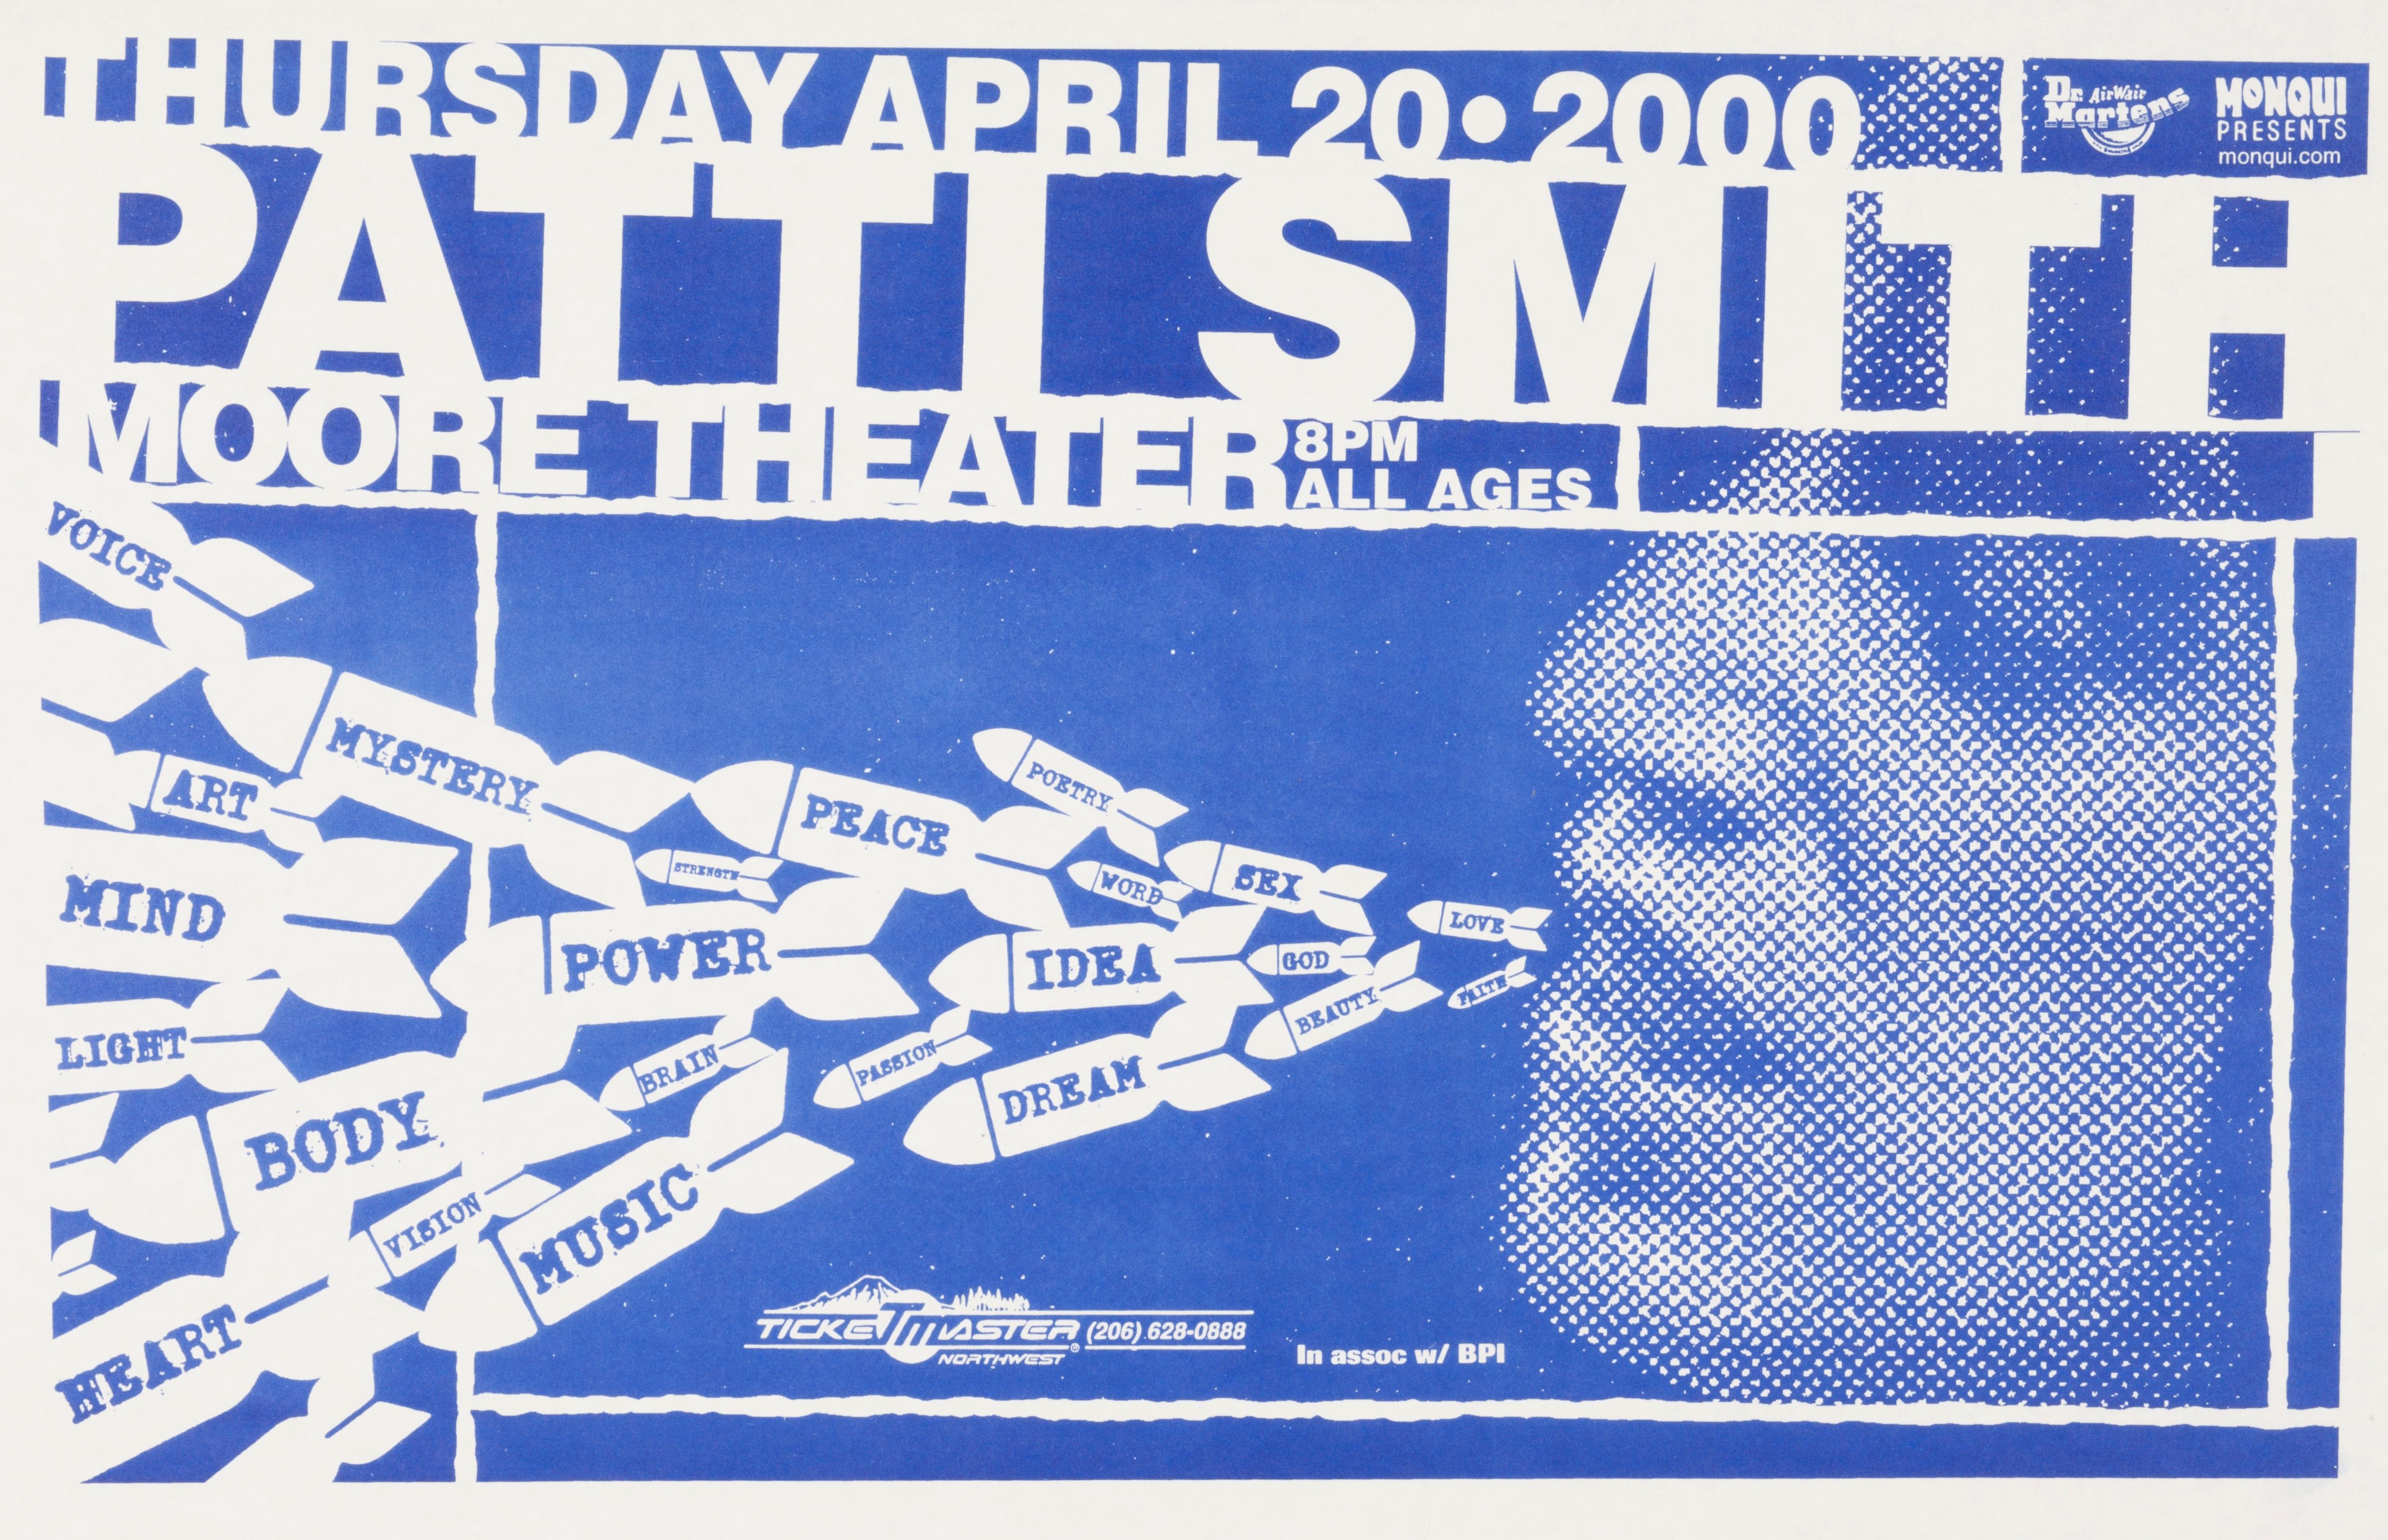 MXP-157.3 Patti Smith 2000 Moore Theater Concert Poster